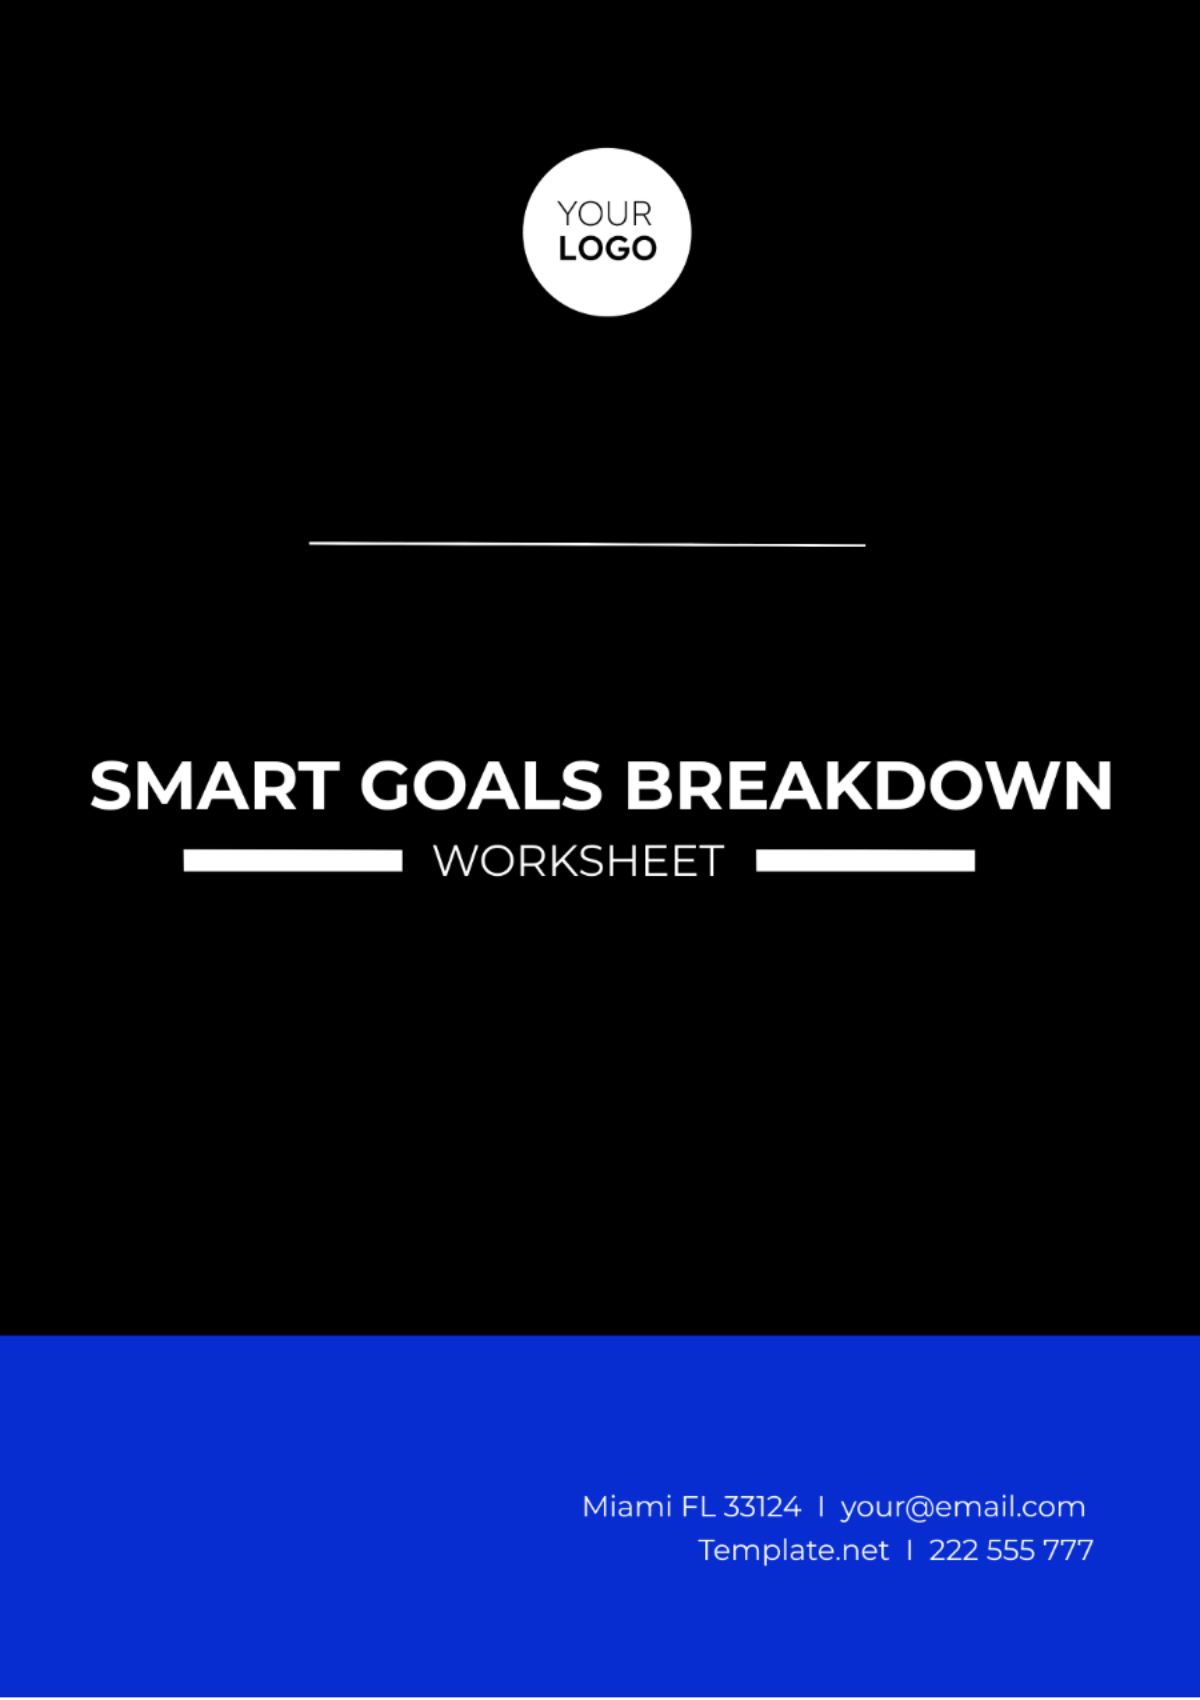 SMART Goal Breakdown Worksheet Template